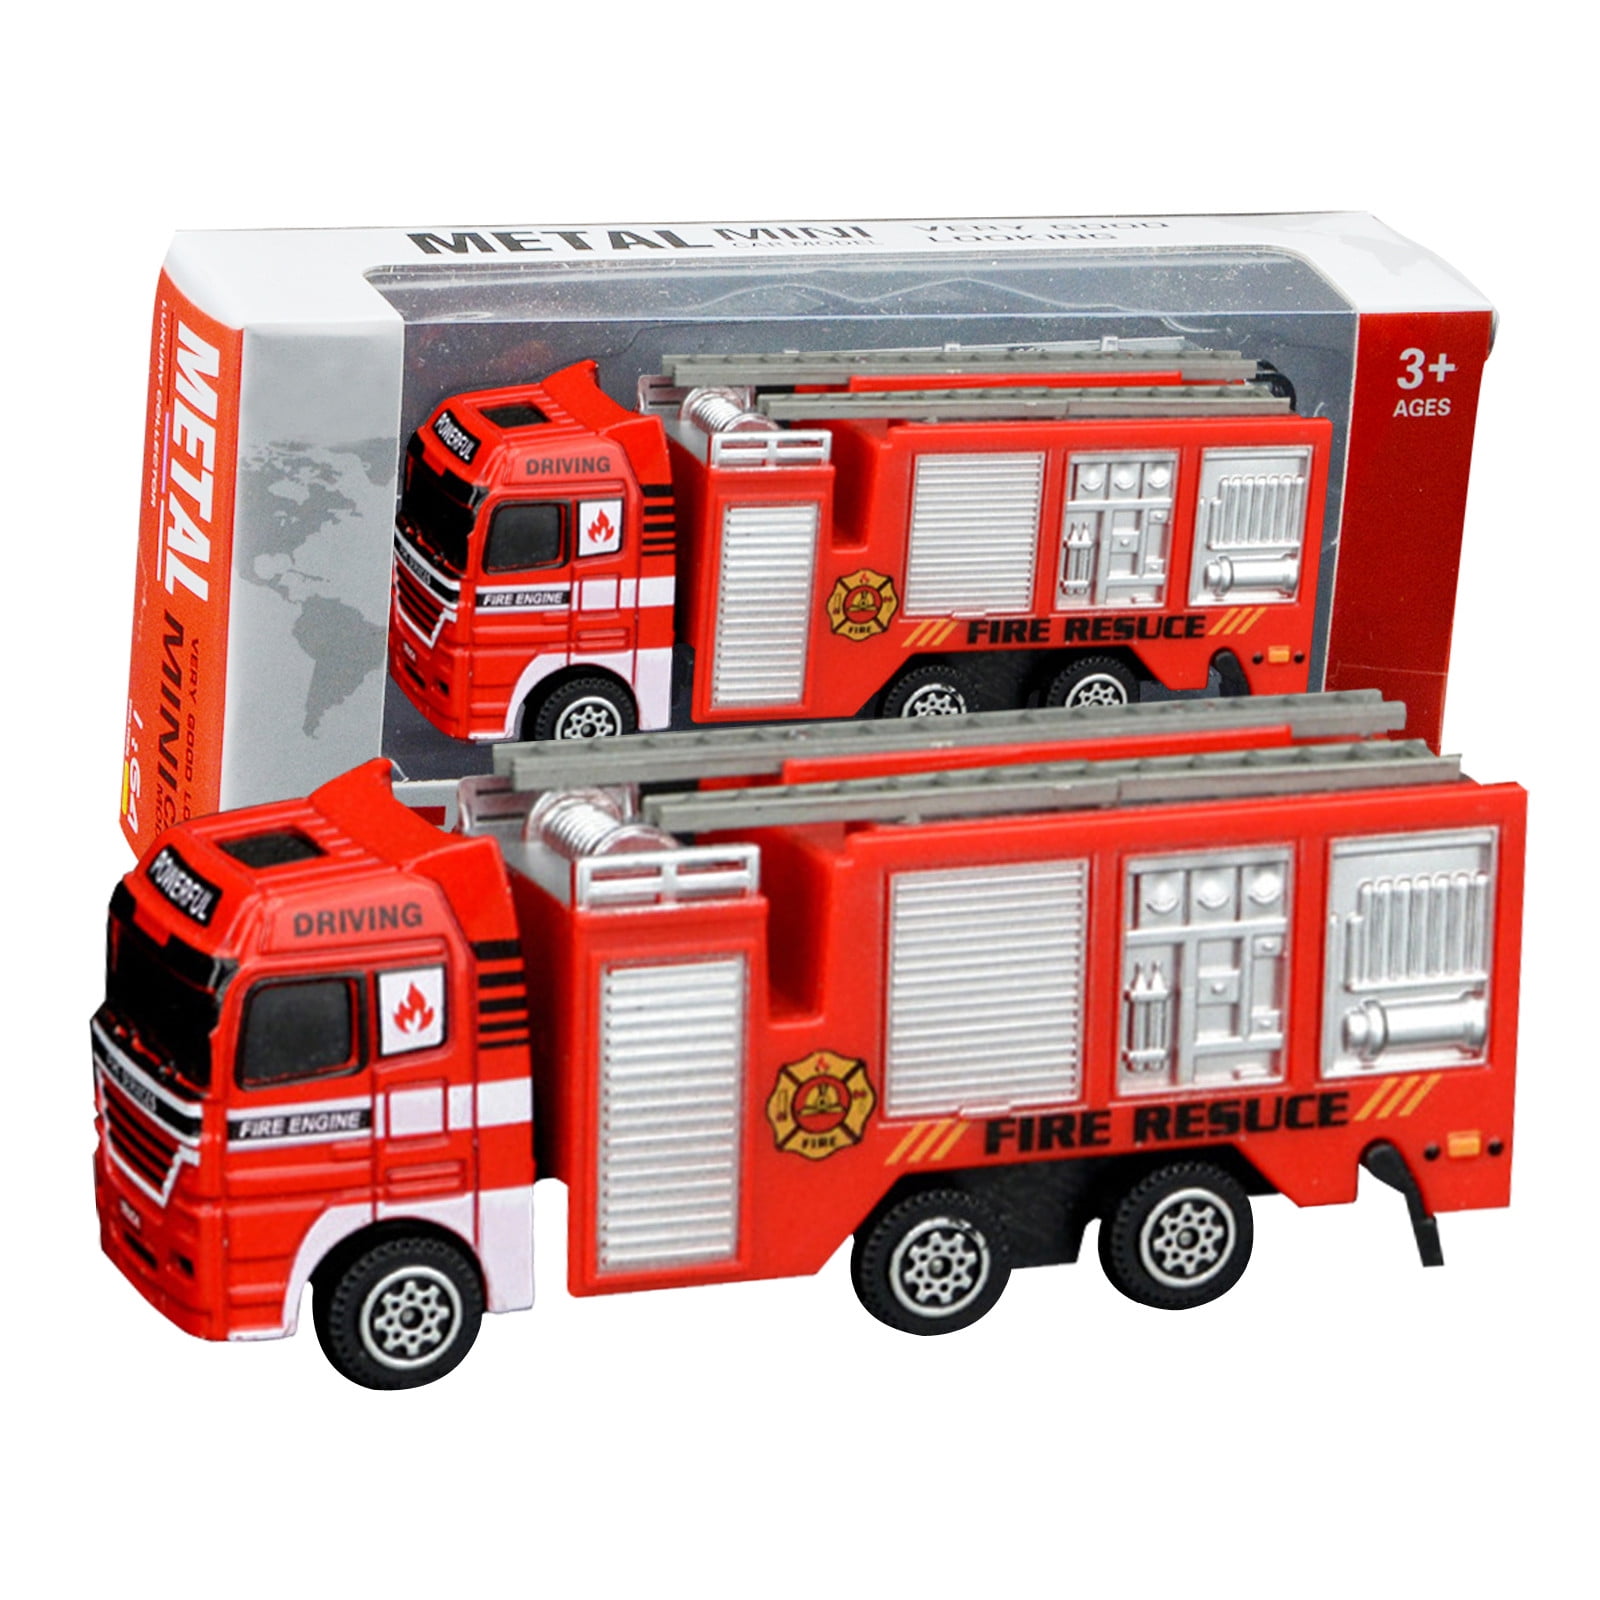 Engineering Toy Fire Rescue Mining Truck Car Truck Children's Birthday Gift 